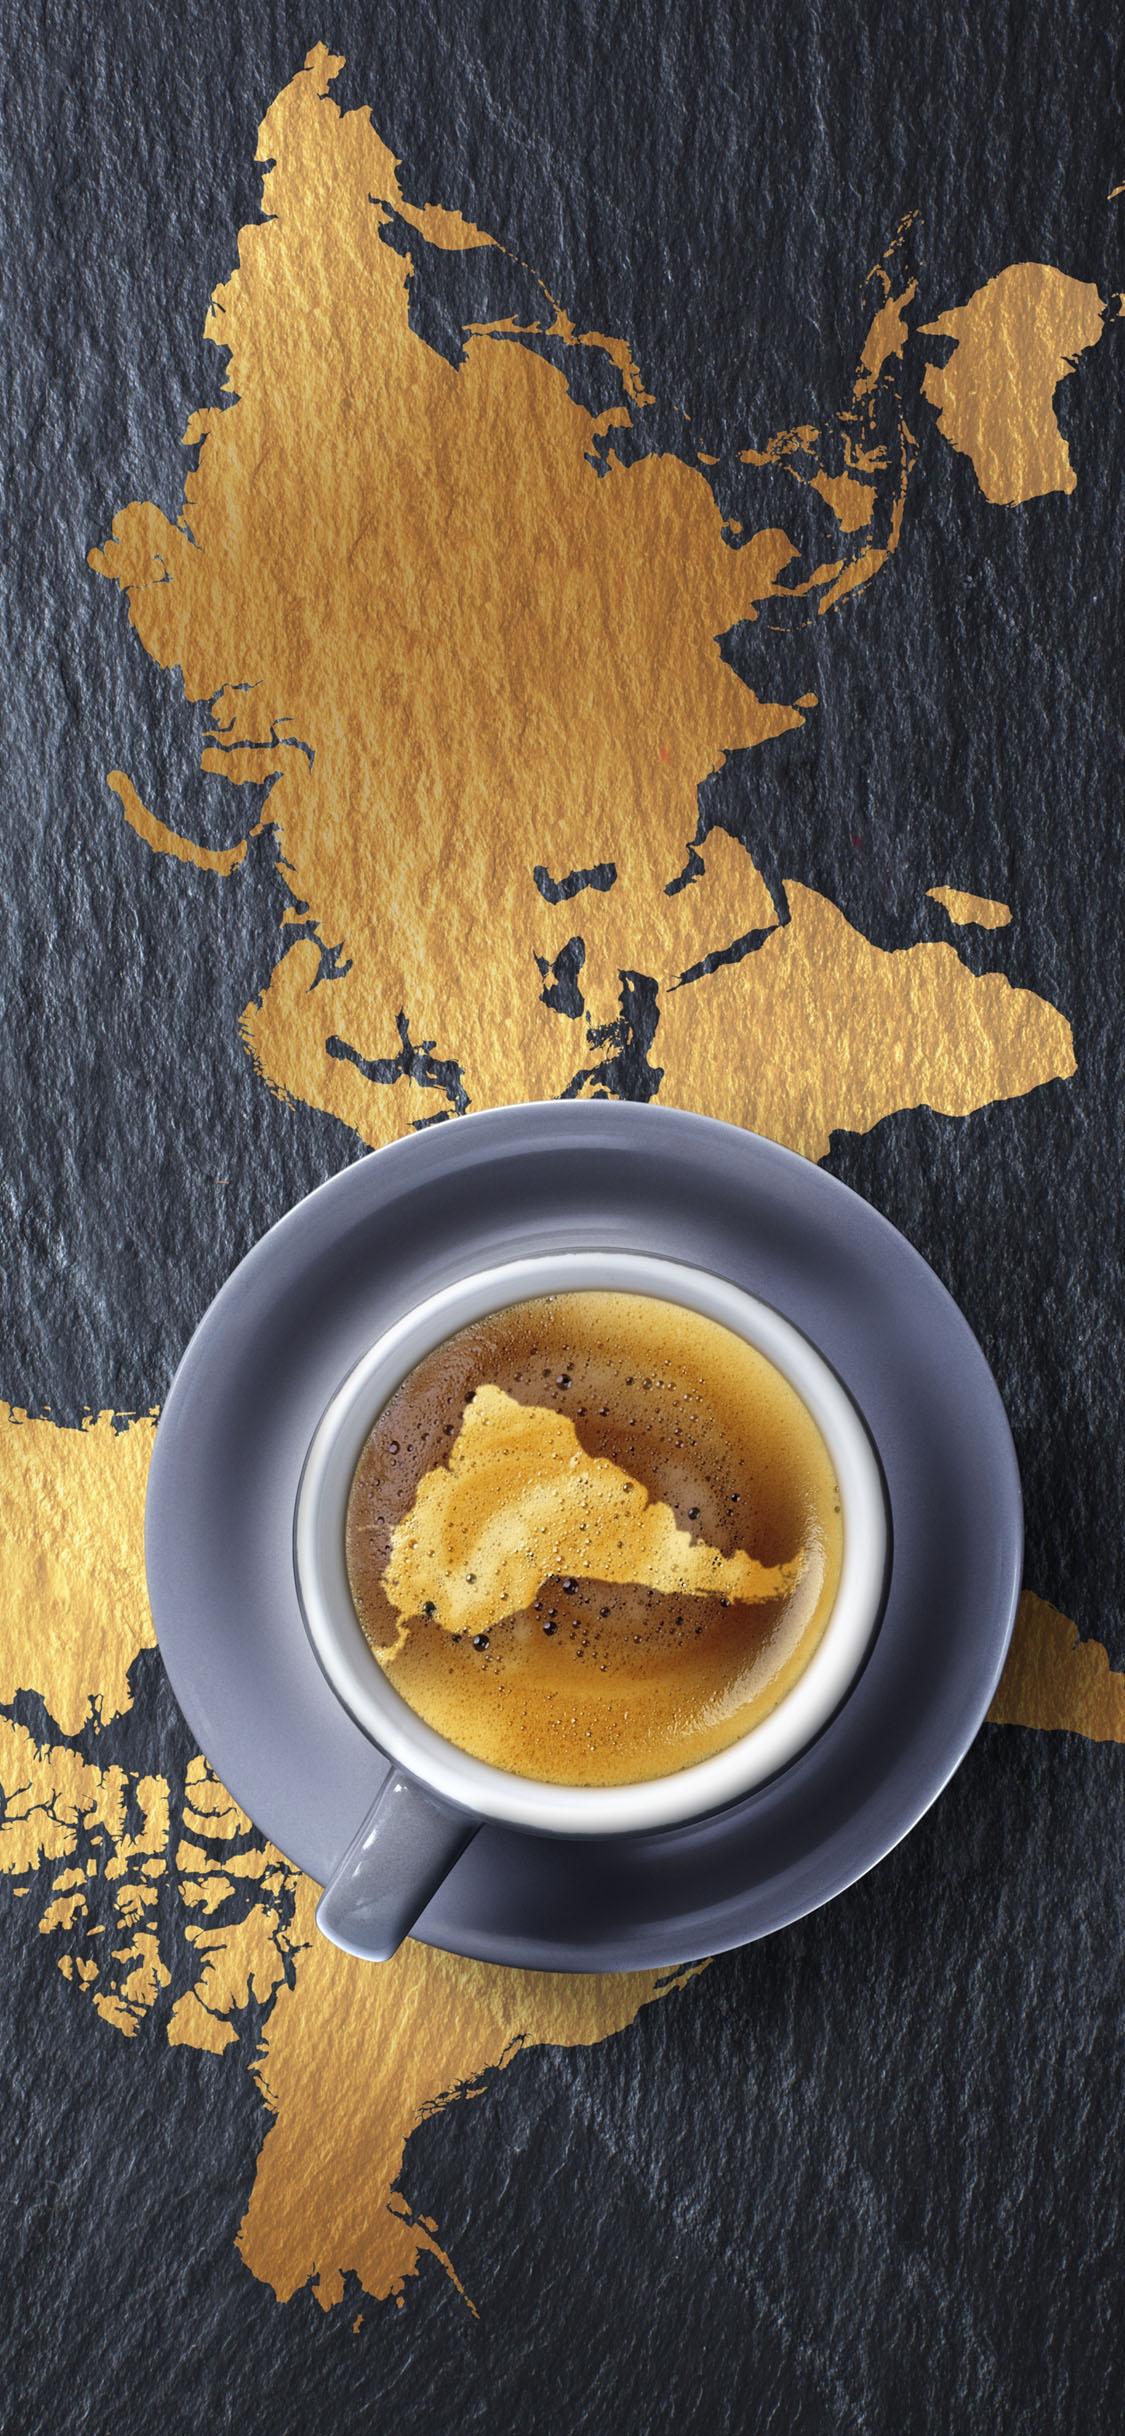 Best Food & Drink iPhone X Wallpaper Free HD